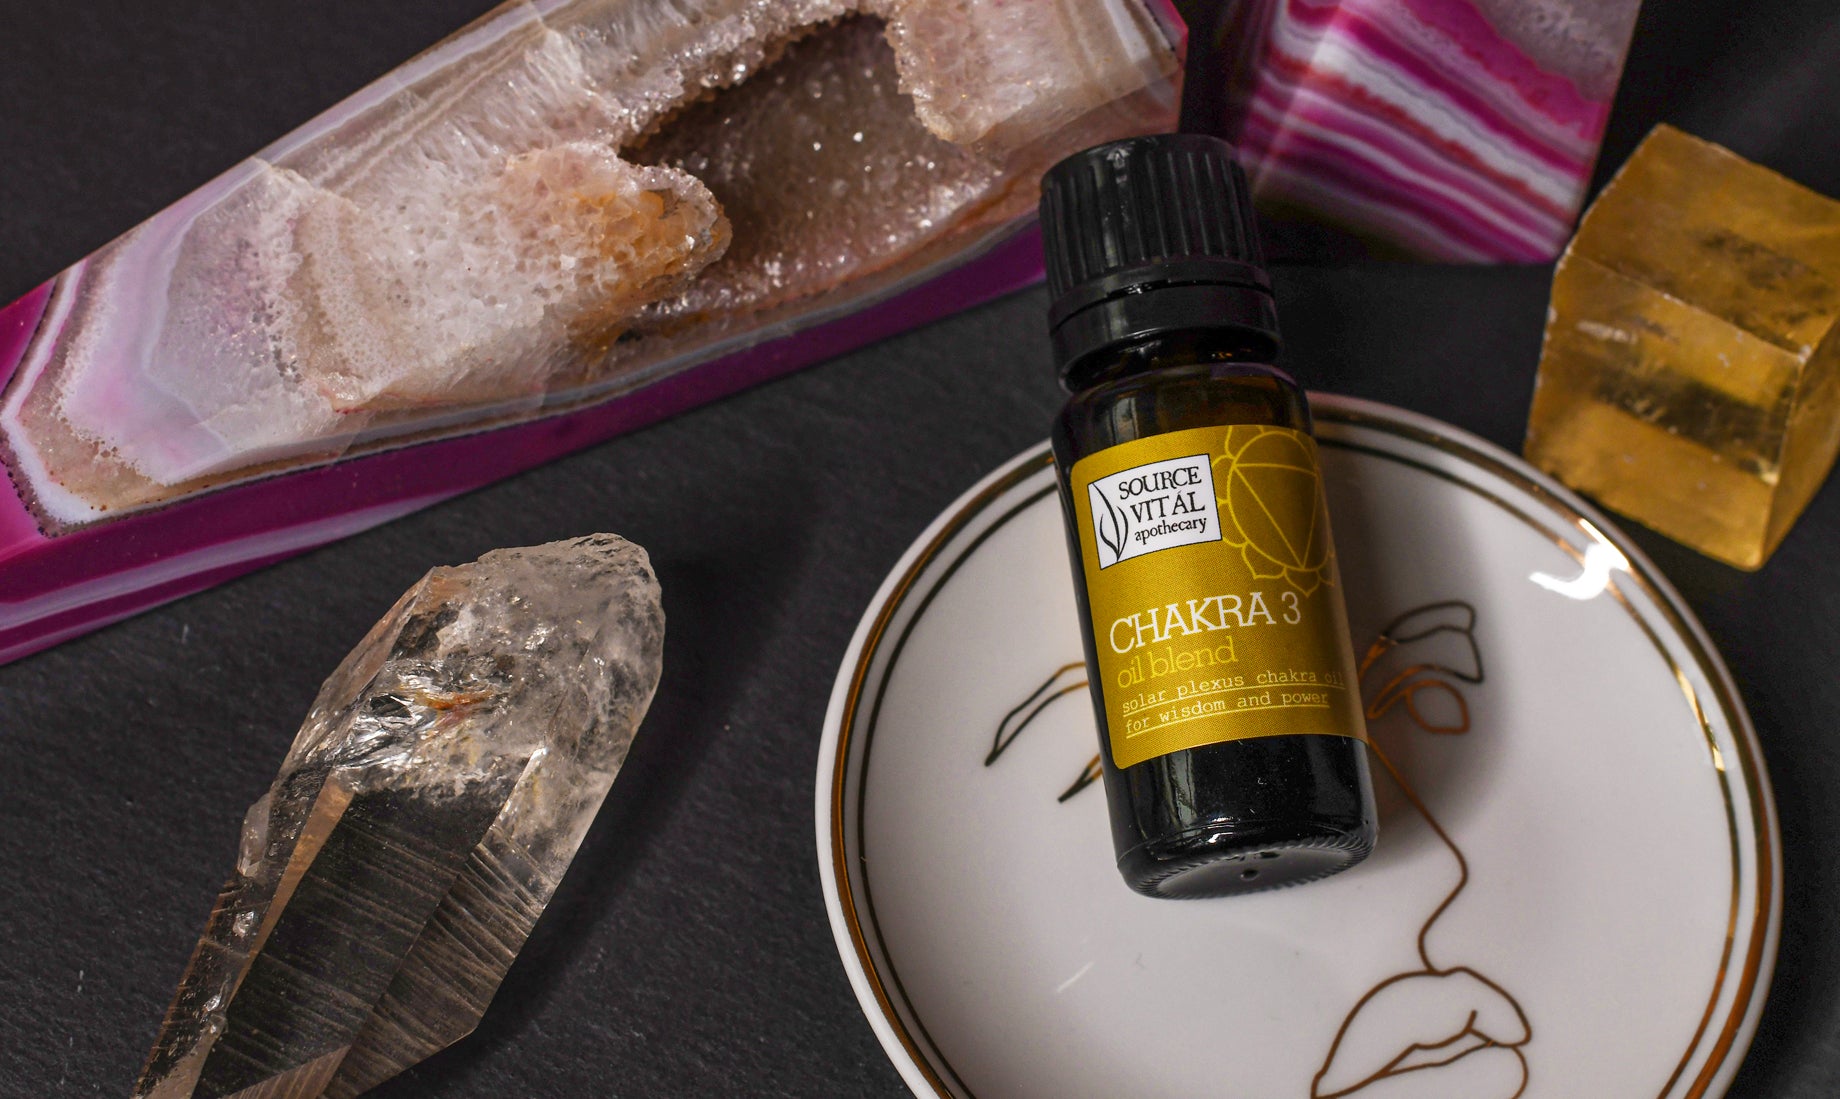 chakra 3 essential oil blend by Source Vitál